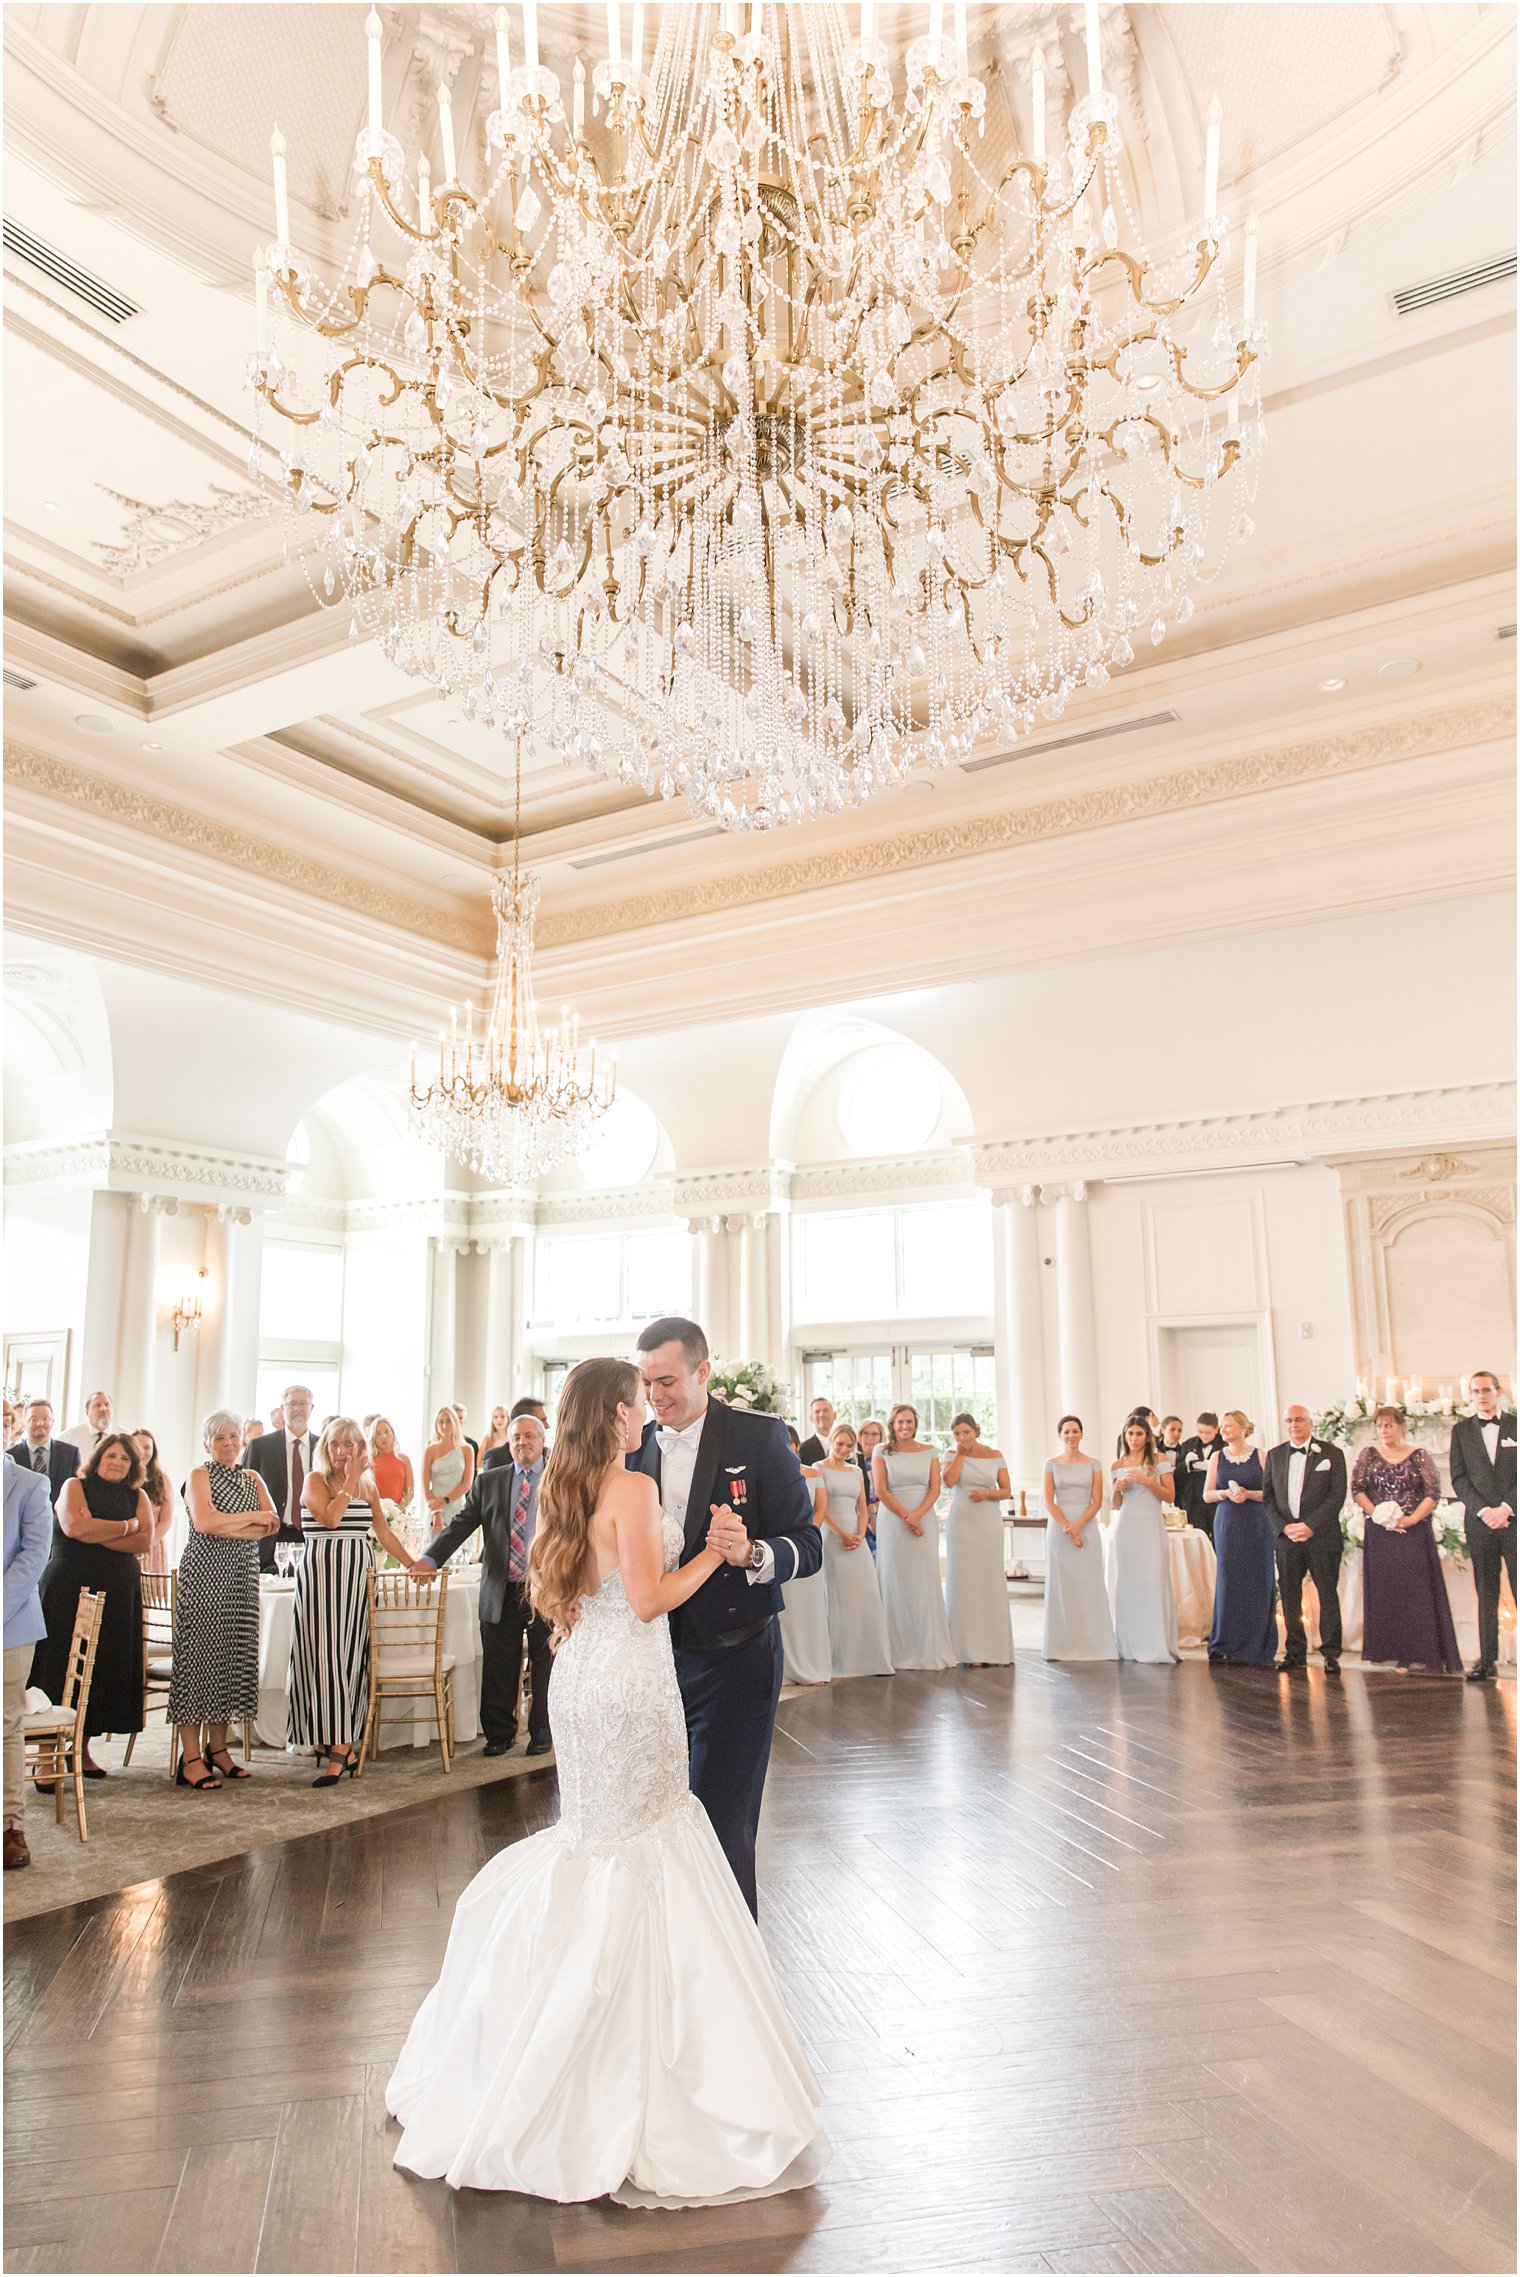 newlyweds have first dance under chandelier at East Brunswick NJ wedding reception